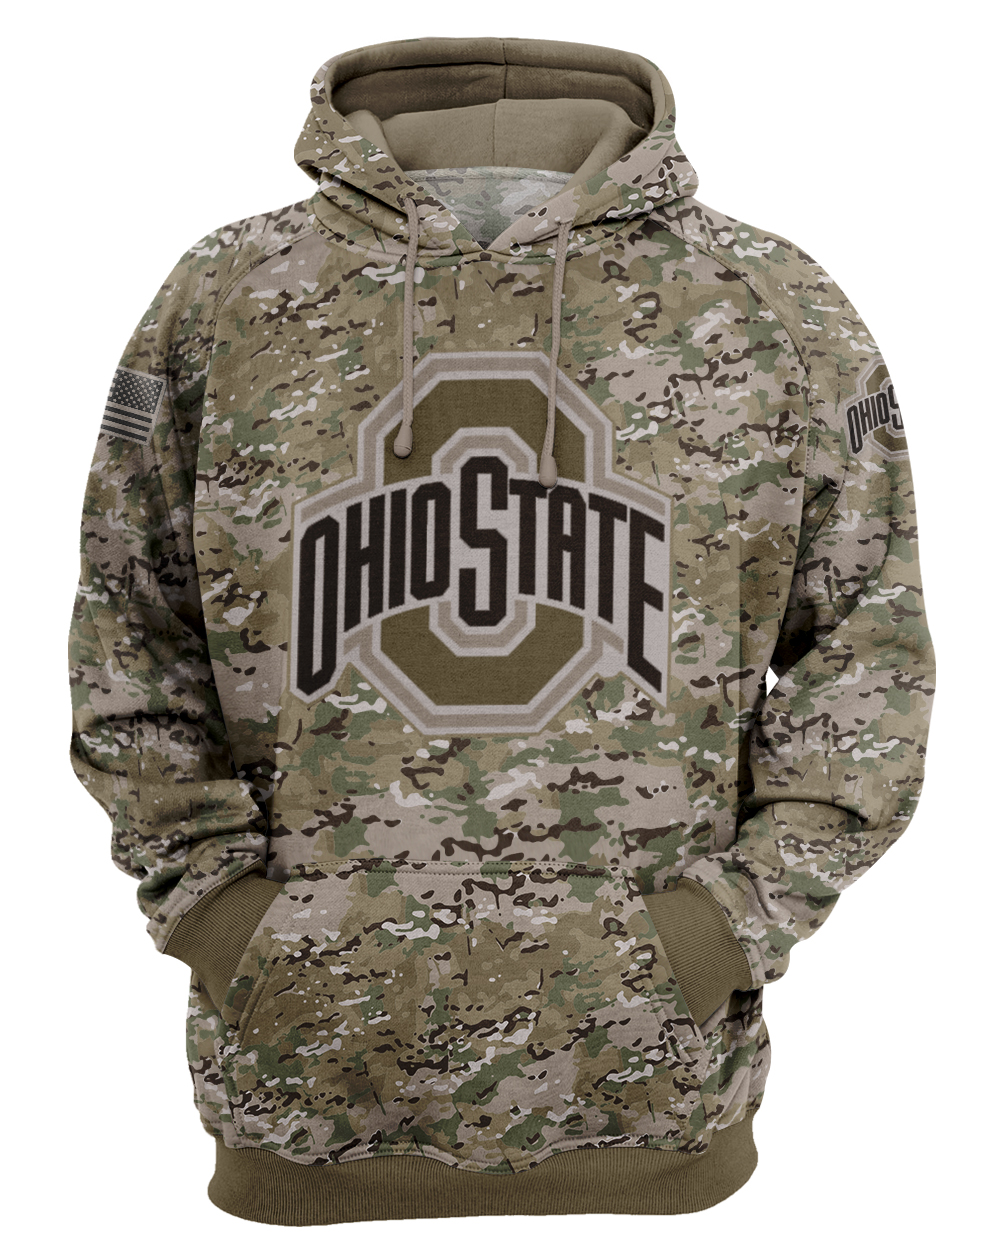 Ohio state buckeyes camo style all over print hoodie 1